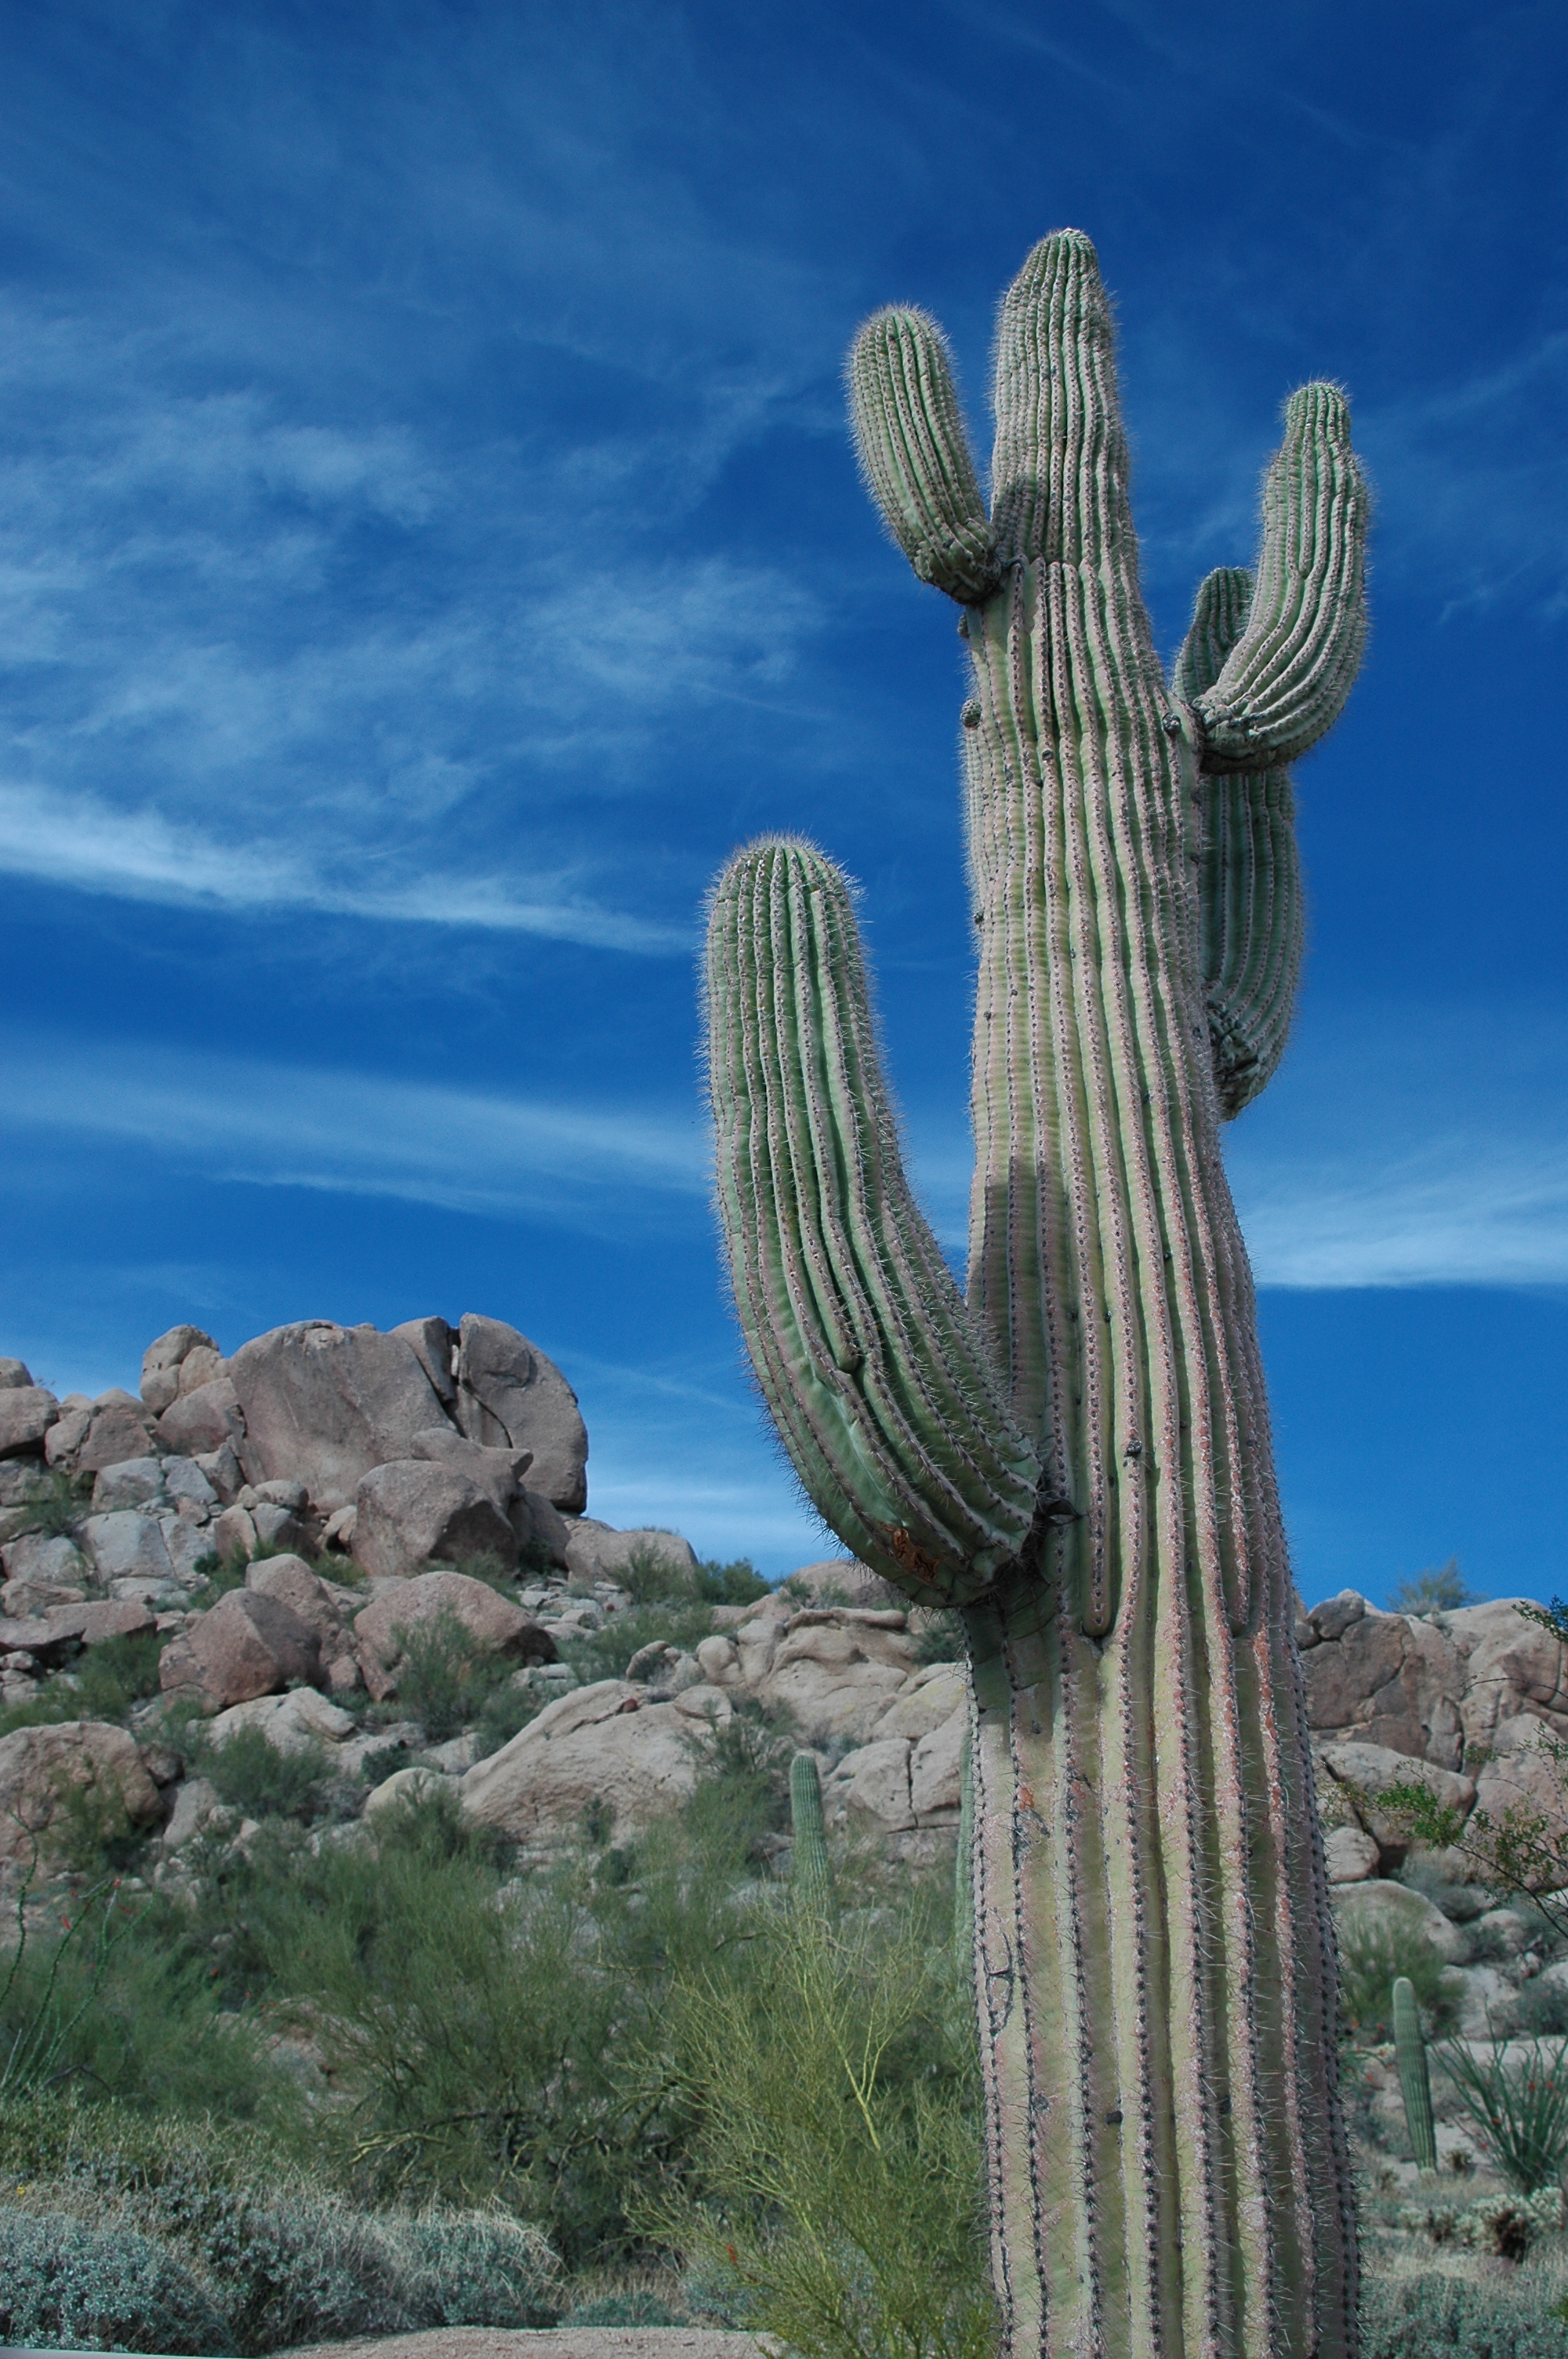 Joe Dobrow photo of a saguaro cactus